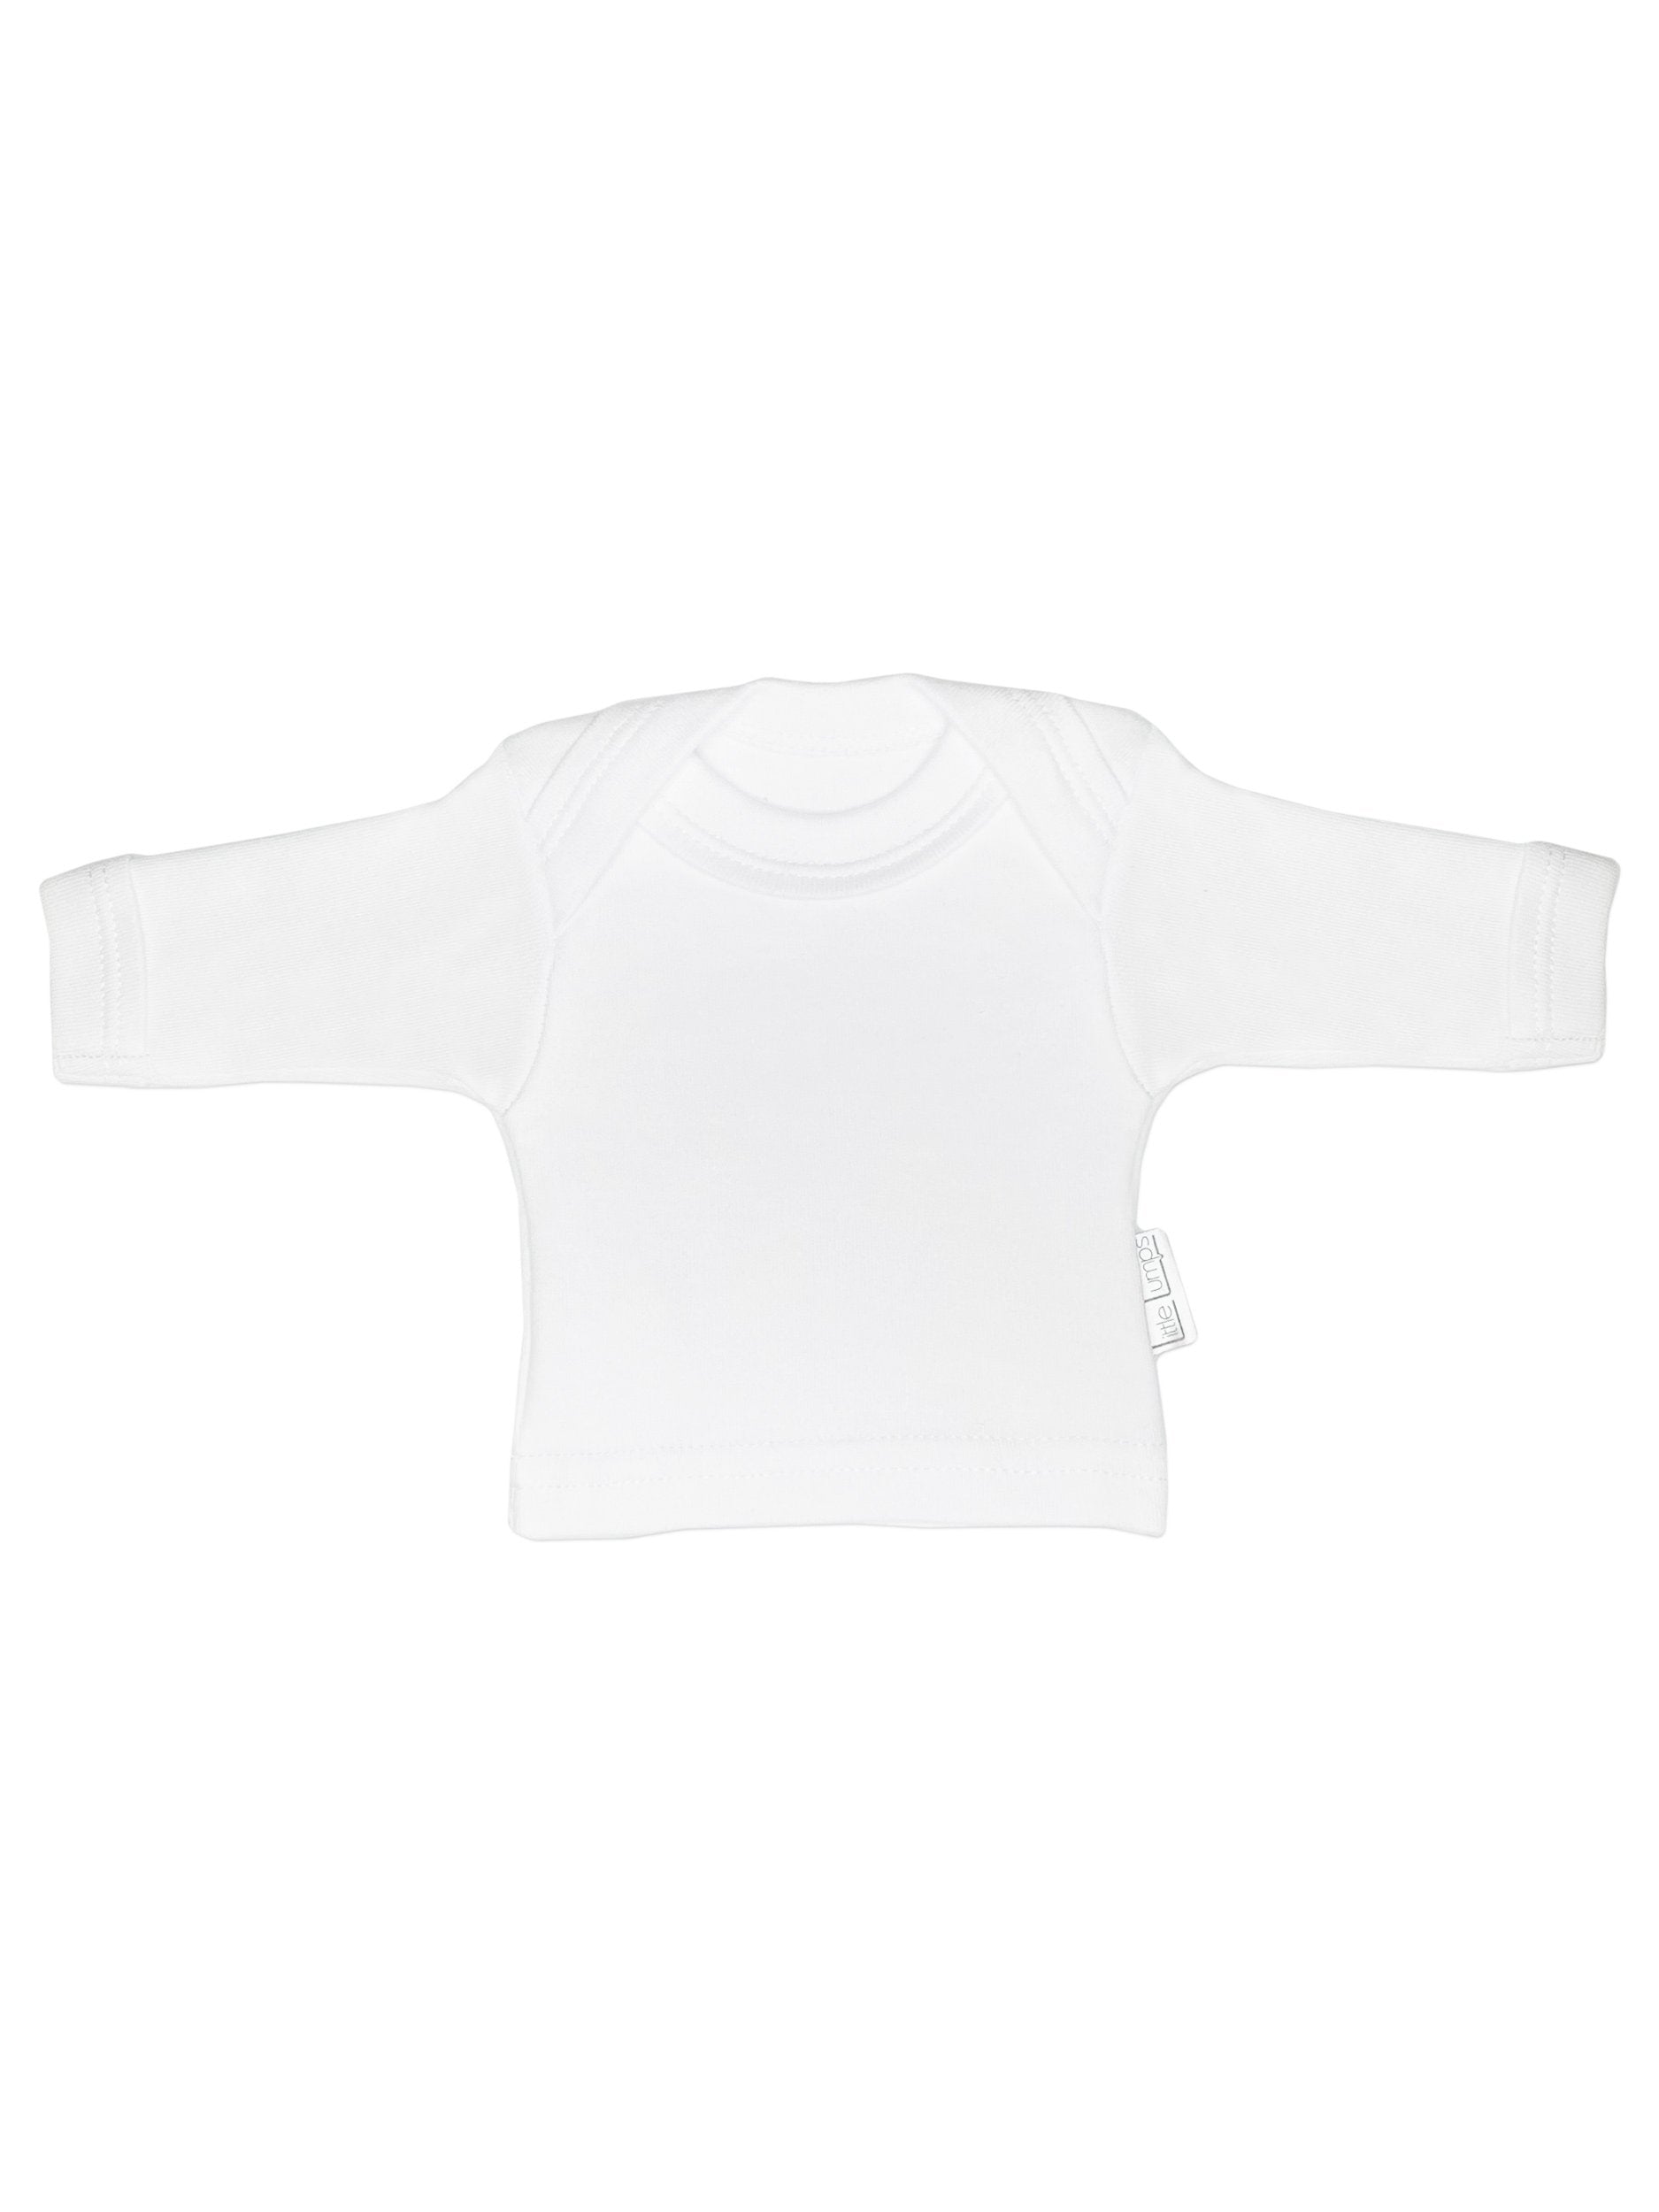 100% Cotton Envelope Neck Top - White Top / T-shirt Tiny & Small 